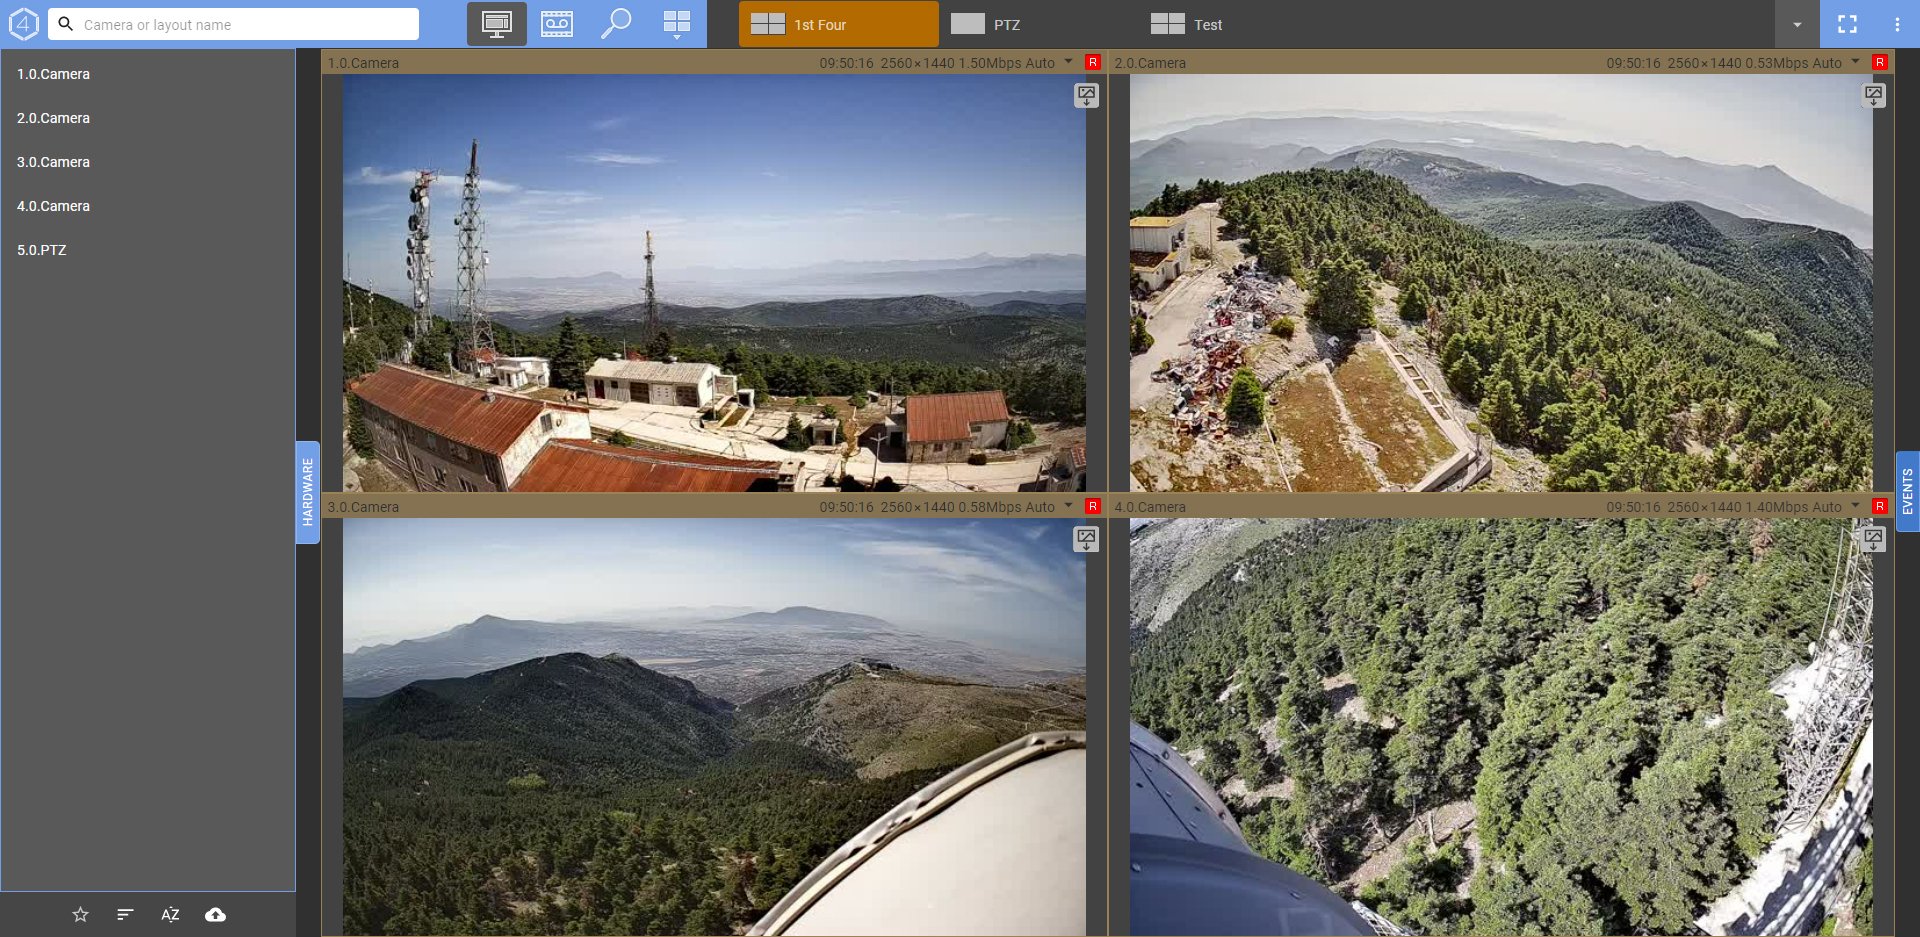 Vodafone Smart Forest: Οι πρώτες εικόνες από το «έξυπνο» δάσος της Πάρνηθας